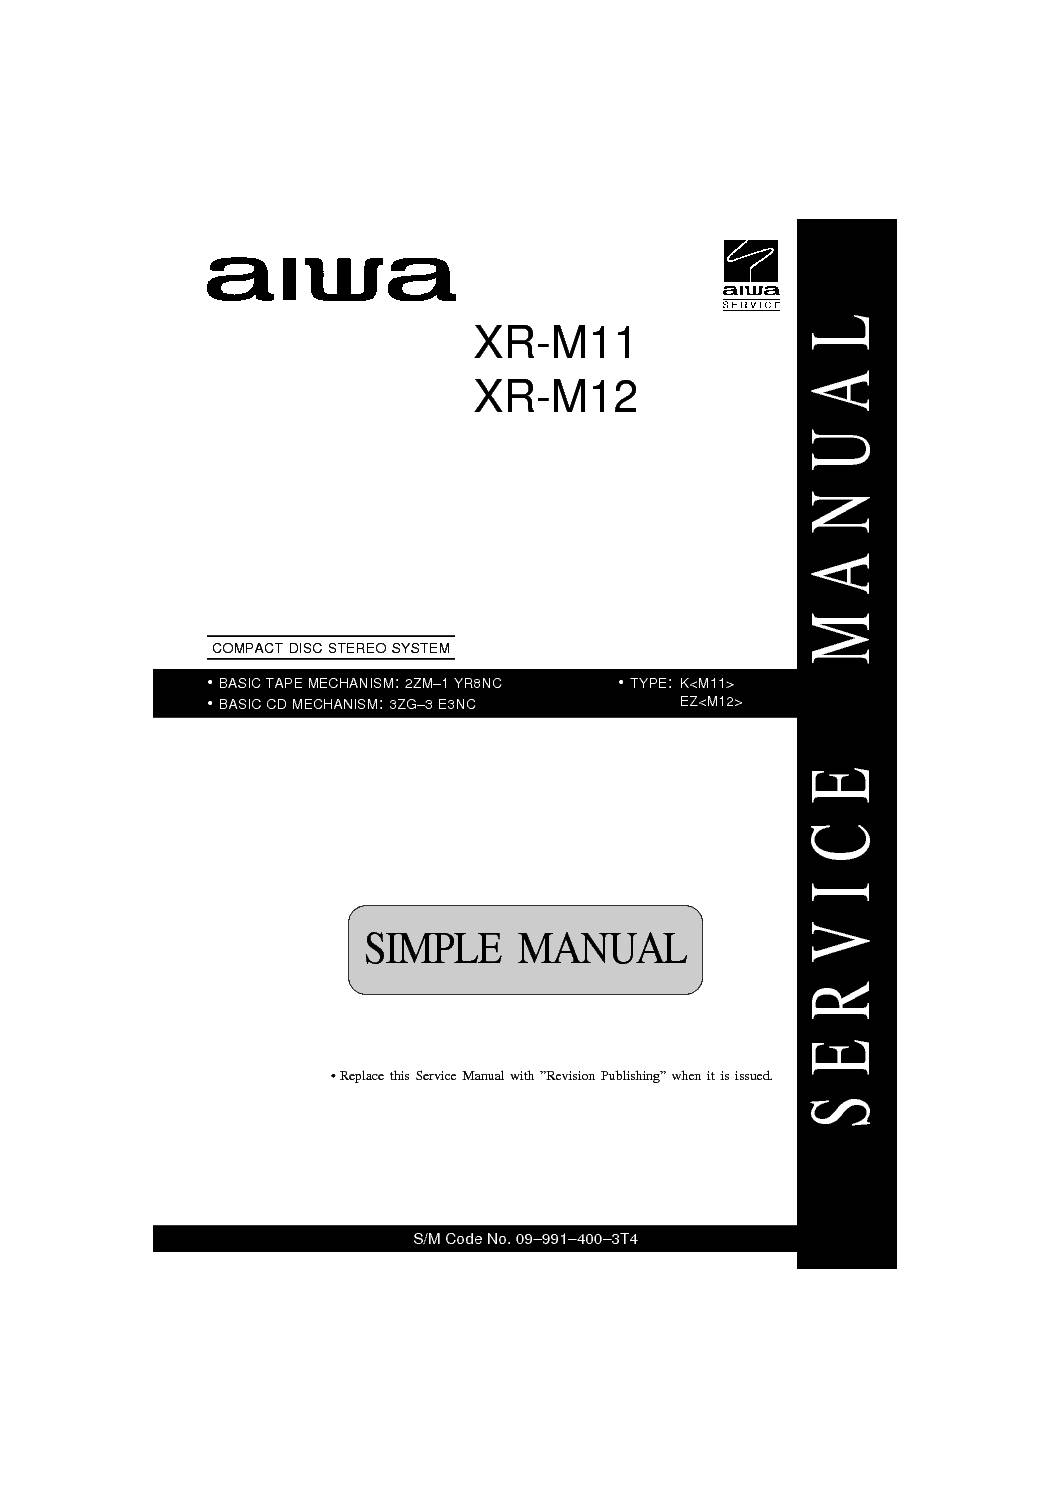 Aiwa XR-M11